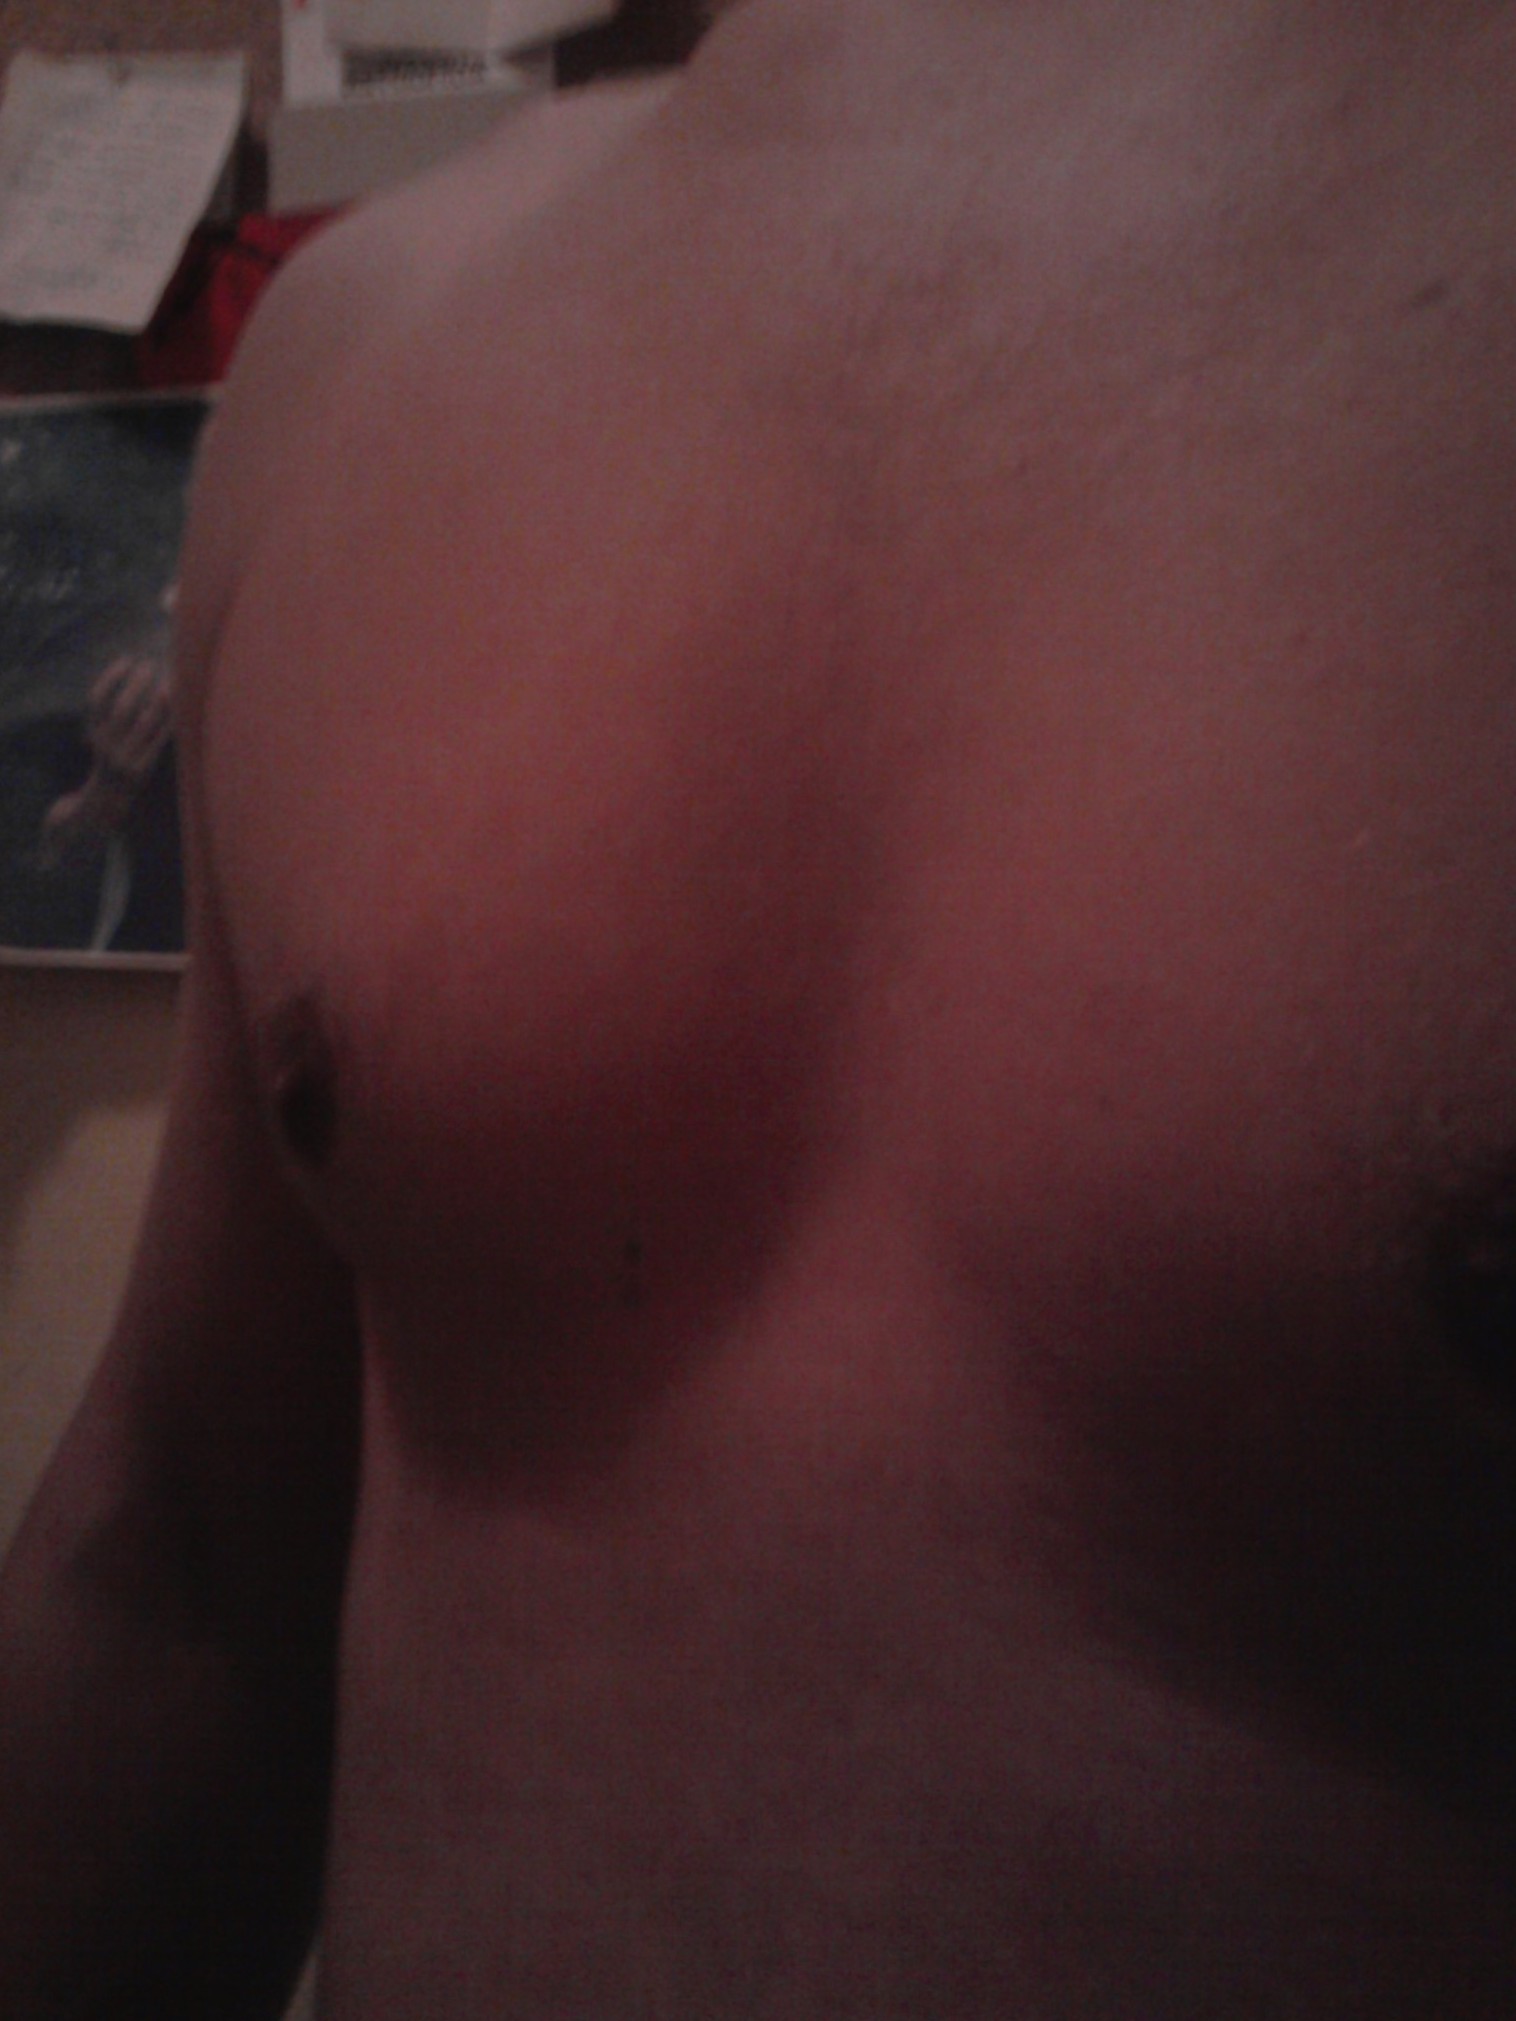 my chest